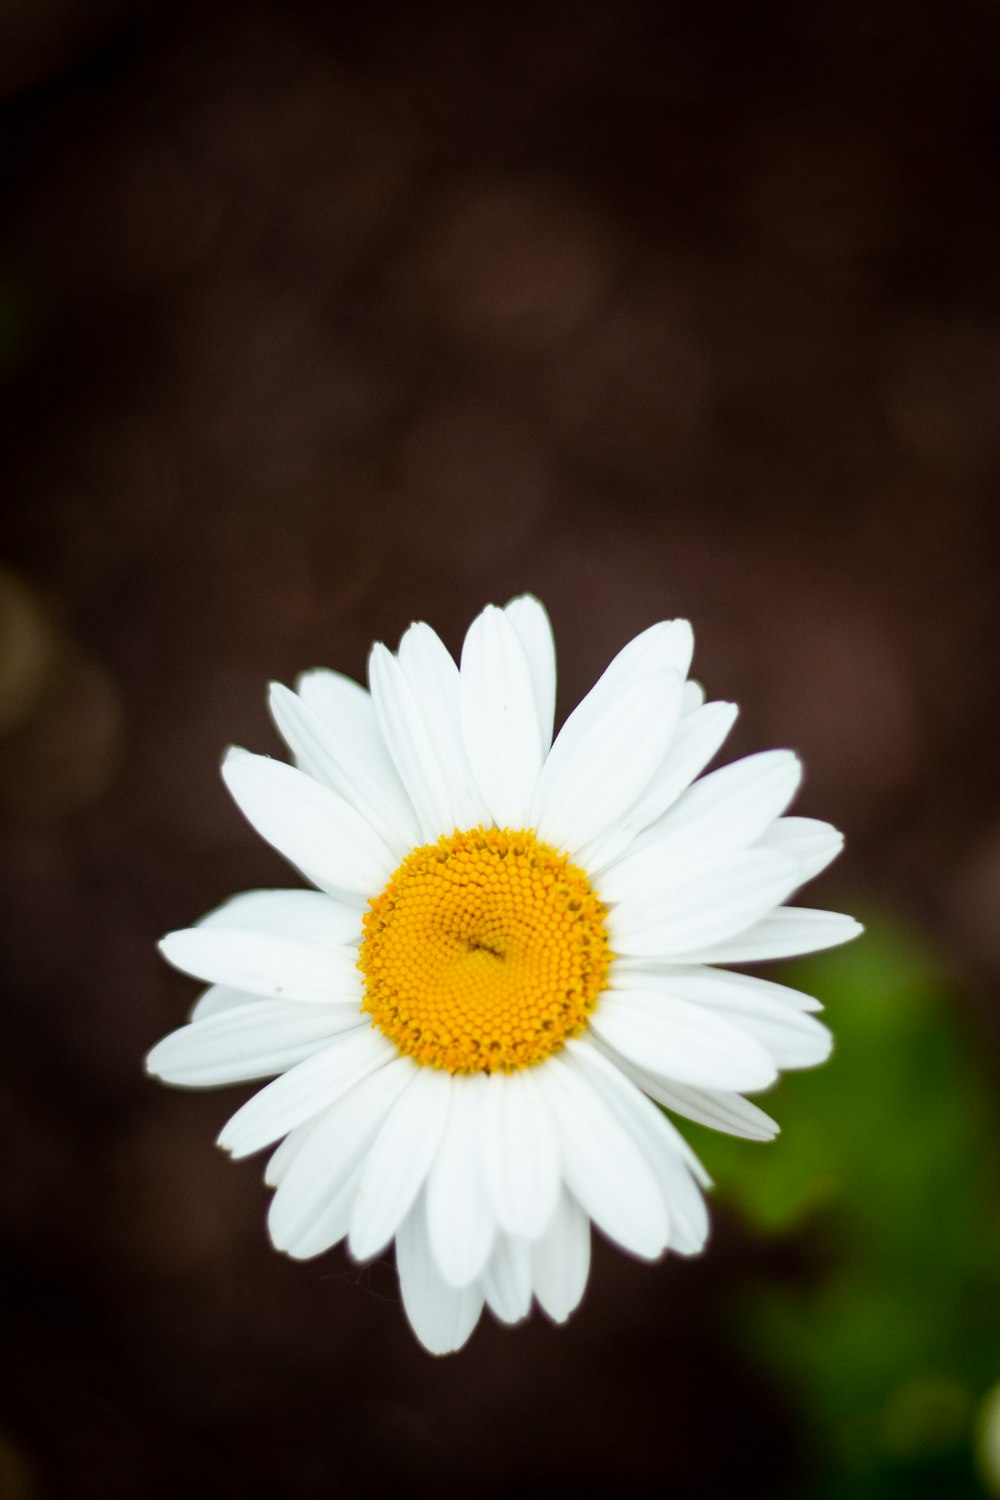 foto de foco seletivo da flor pétala branca